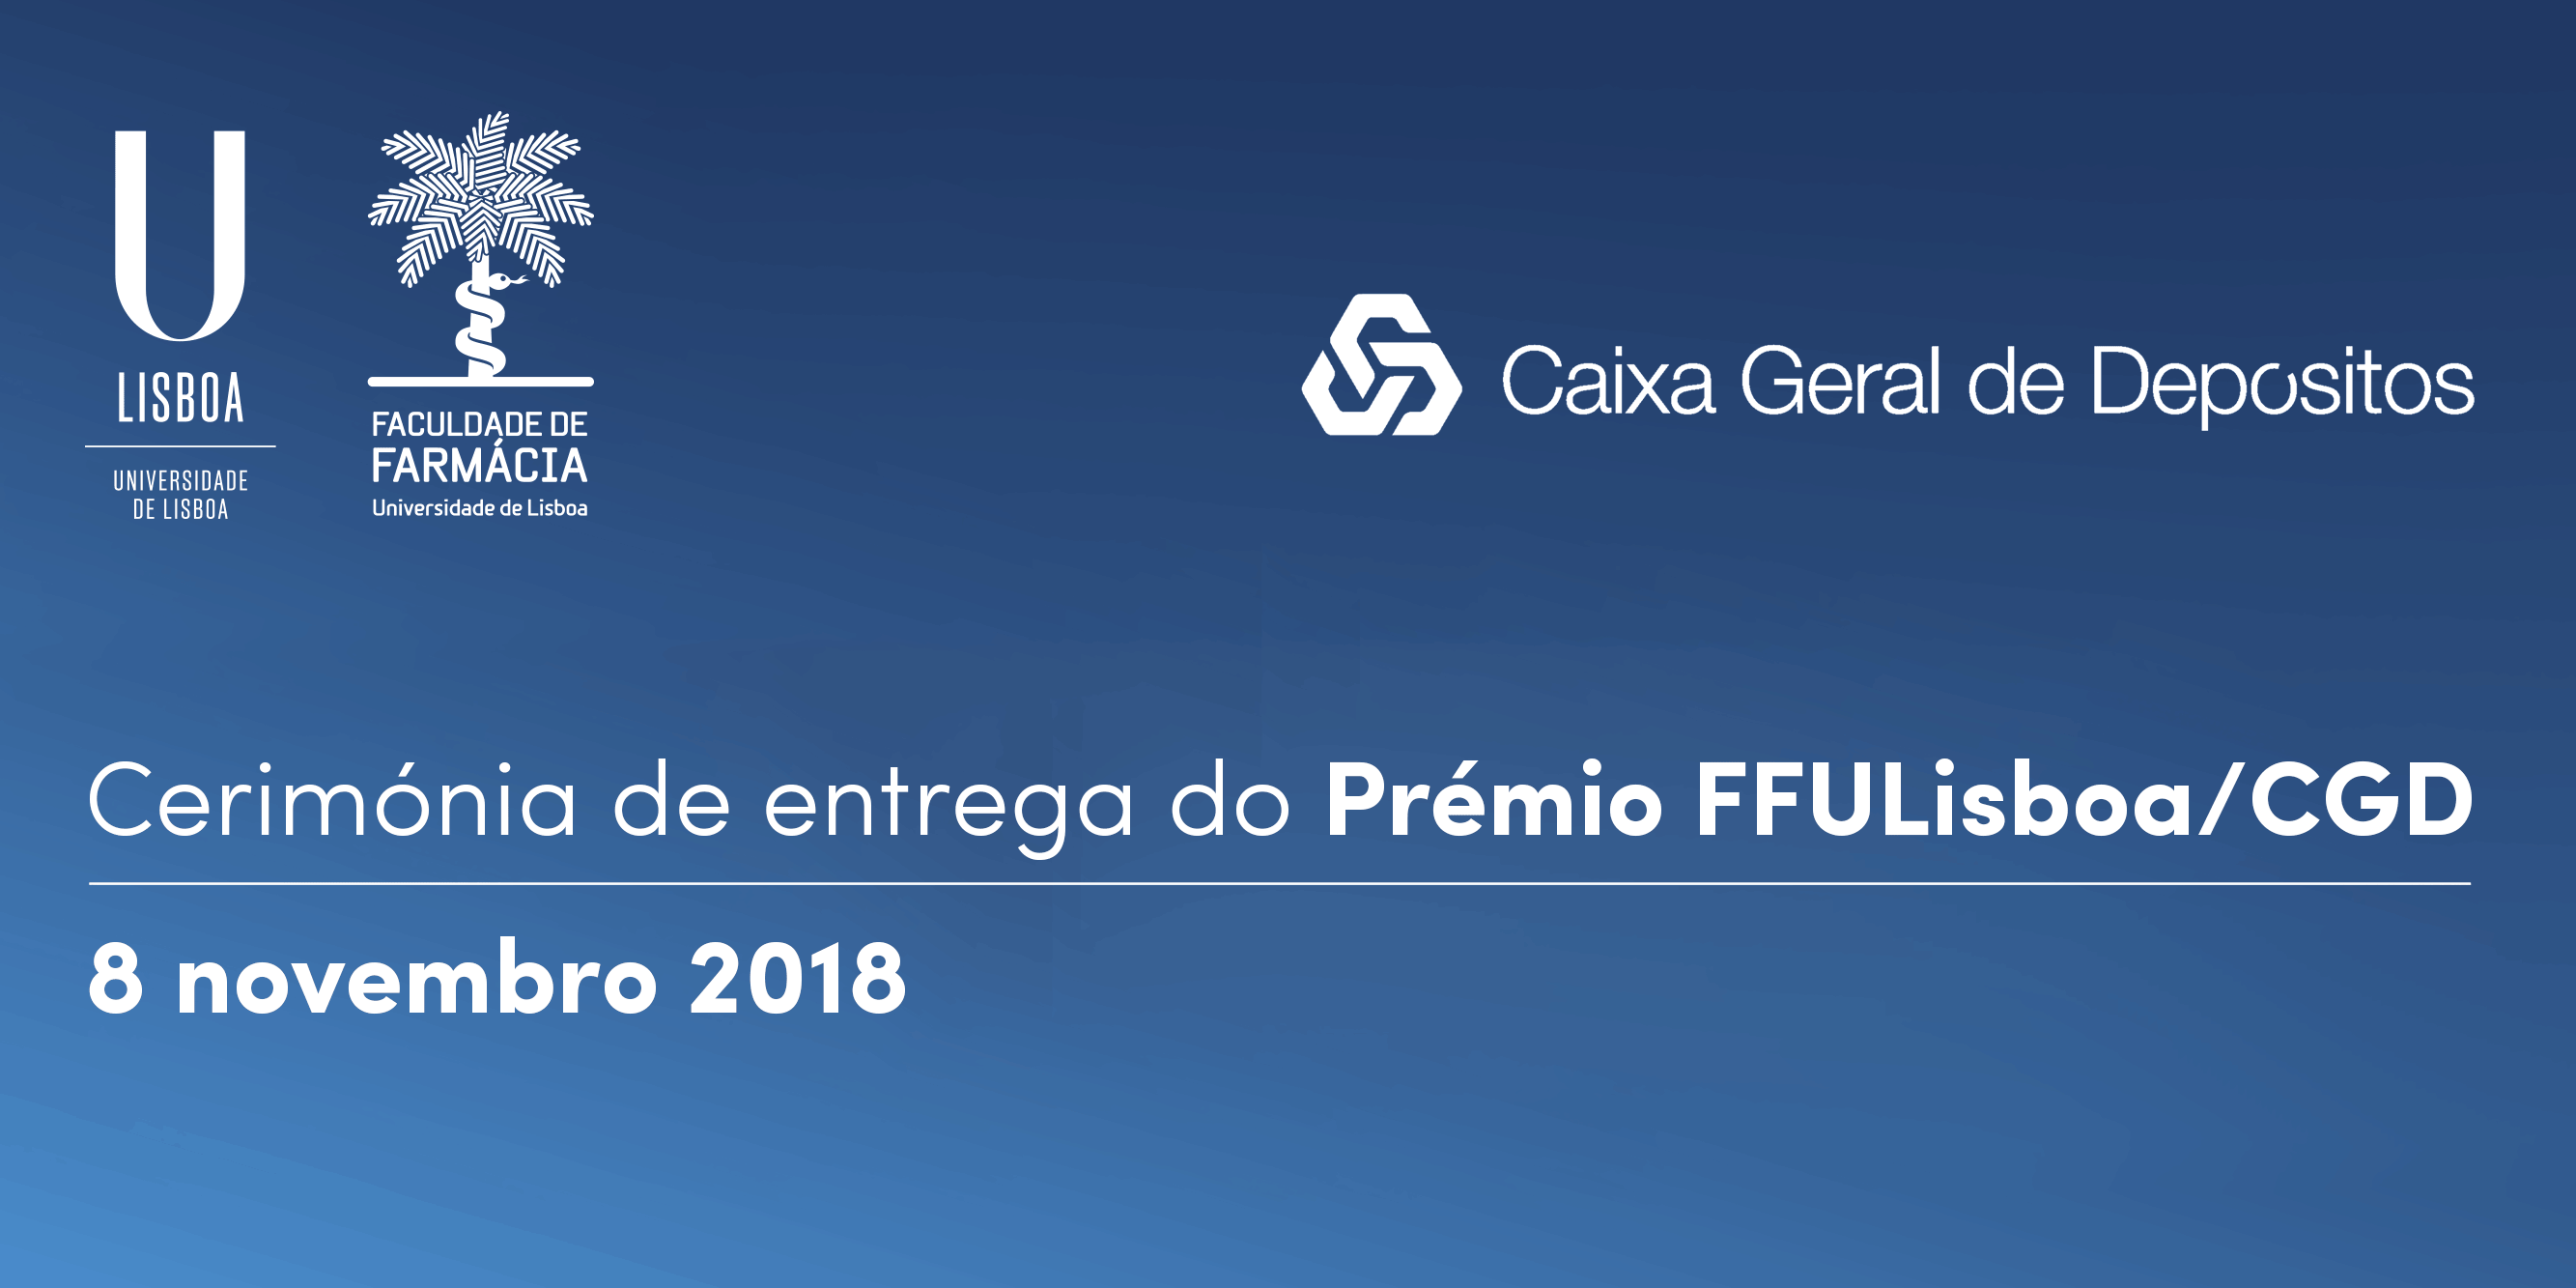 Cerimónia de entrega de Prémios FFULisboa/CGD 2016/2017 e 2015/2016